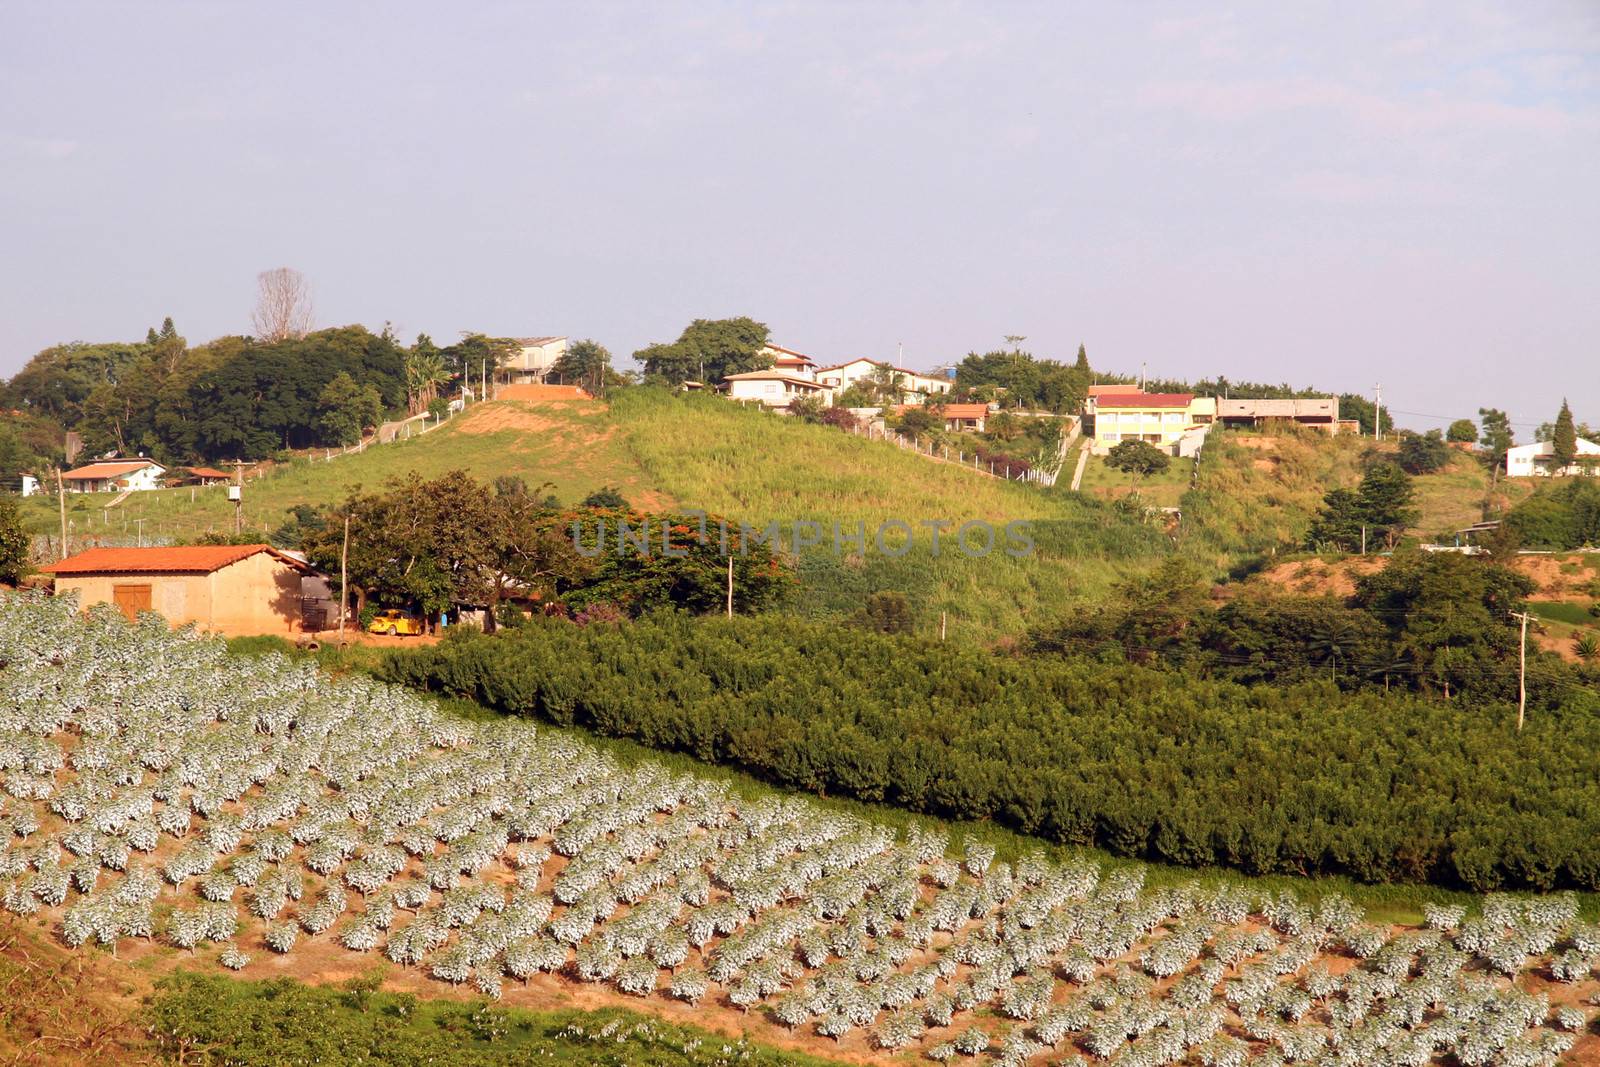 Fig plantation in a field, Sao Paulo, Brazil